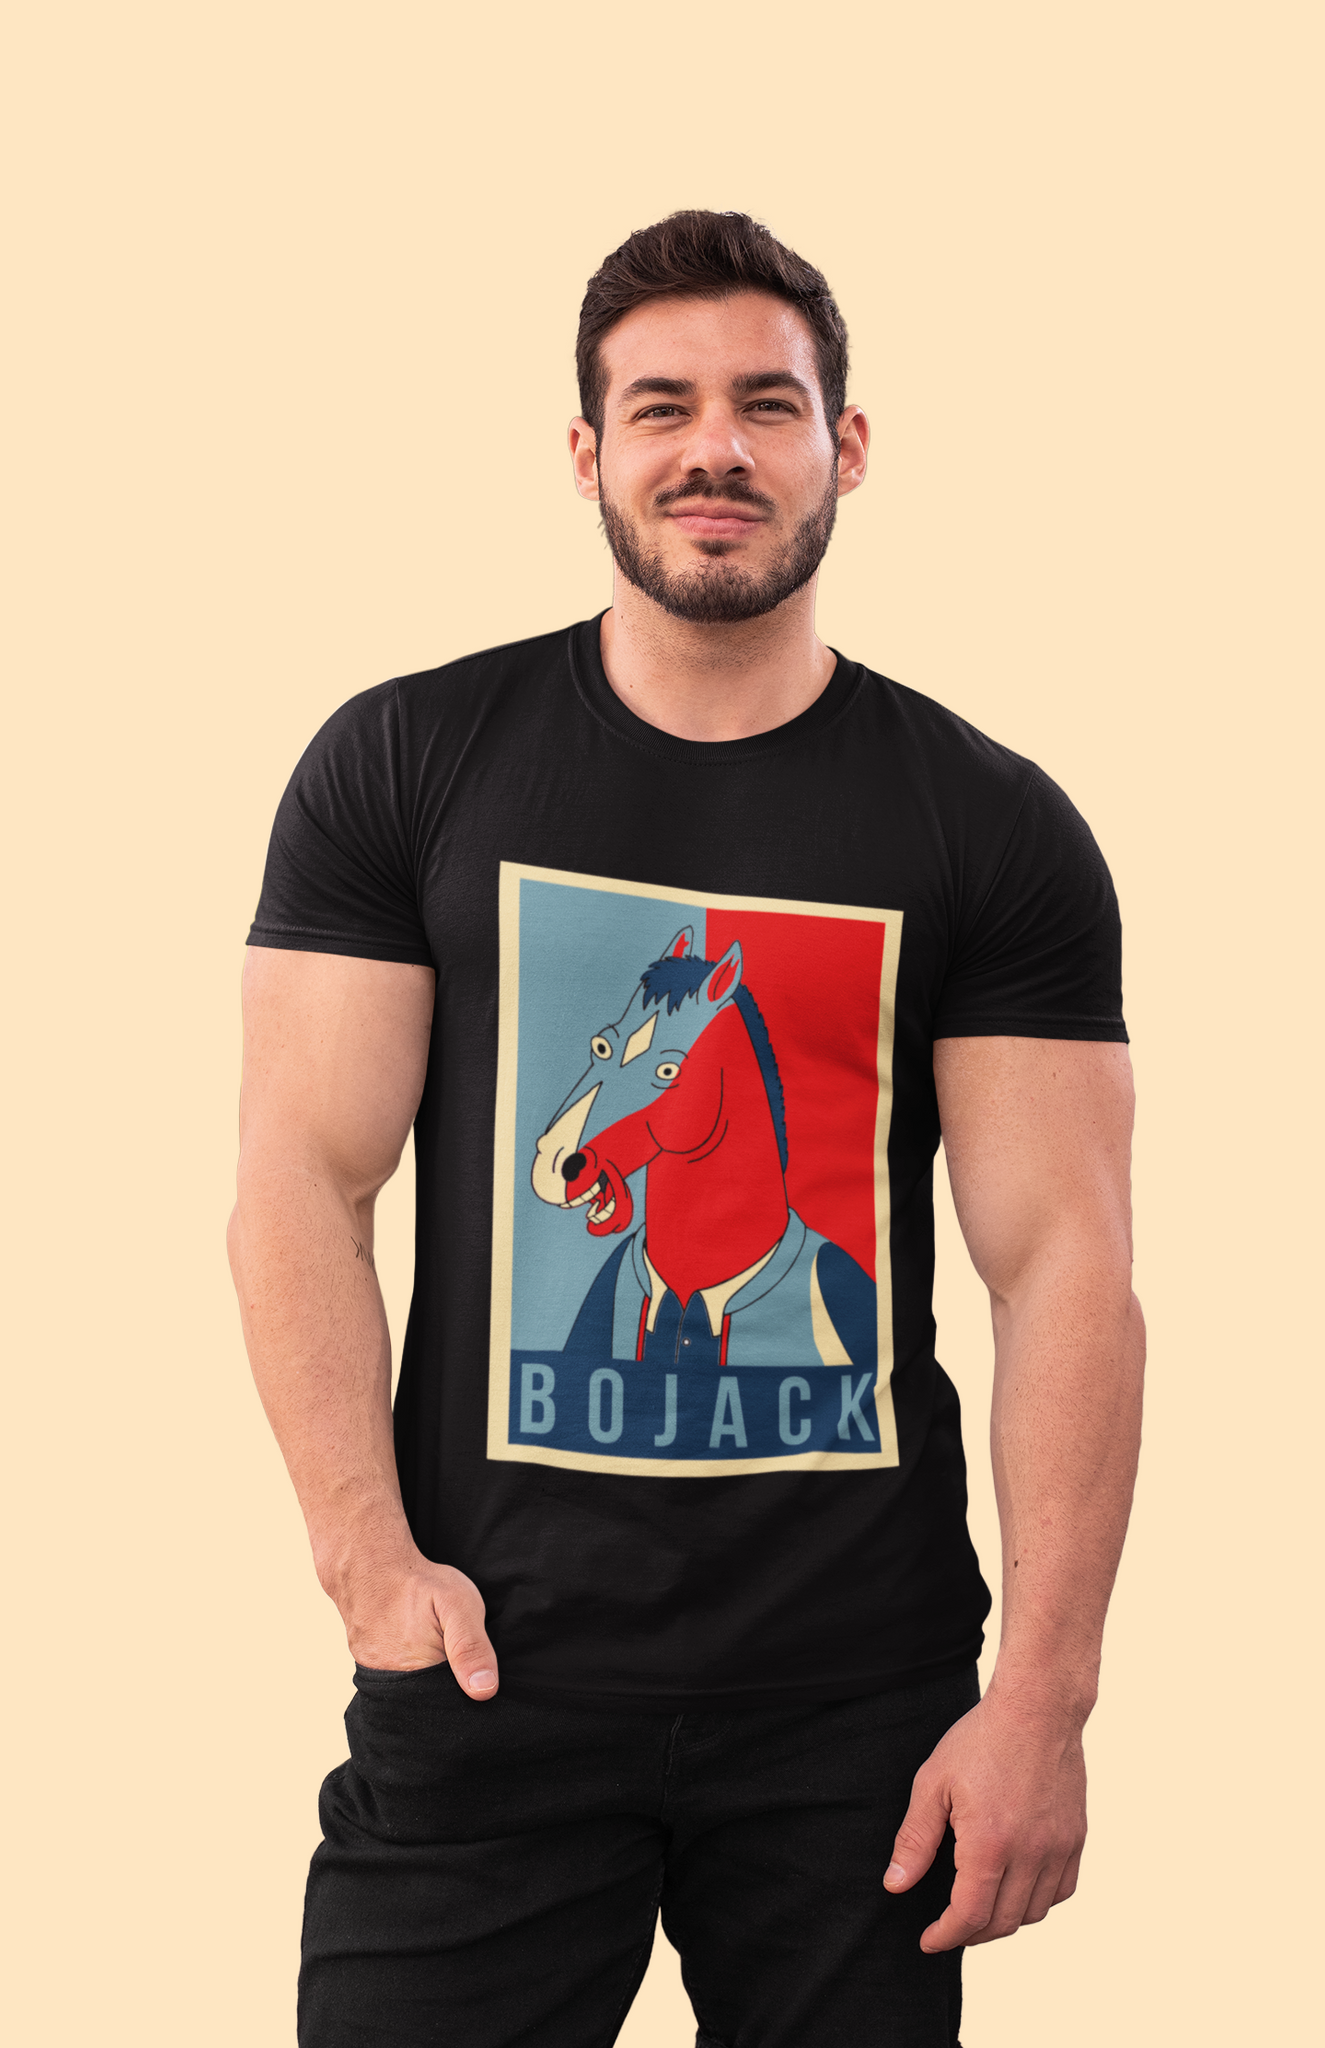 Bojack Horseman T Shirt, Bojack Poster Tshirt